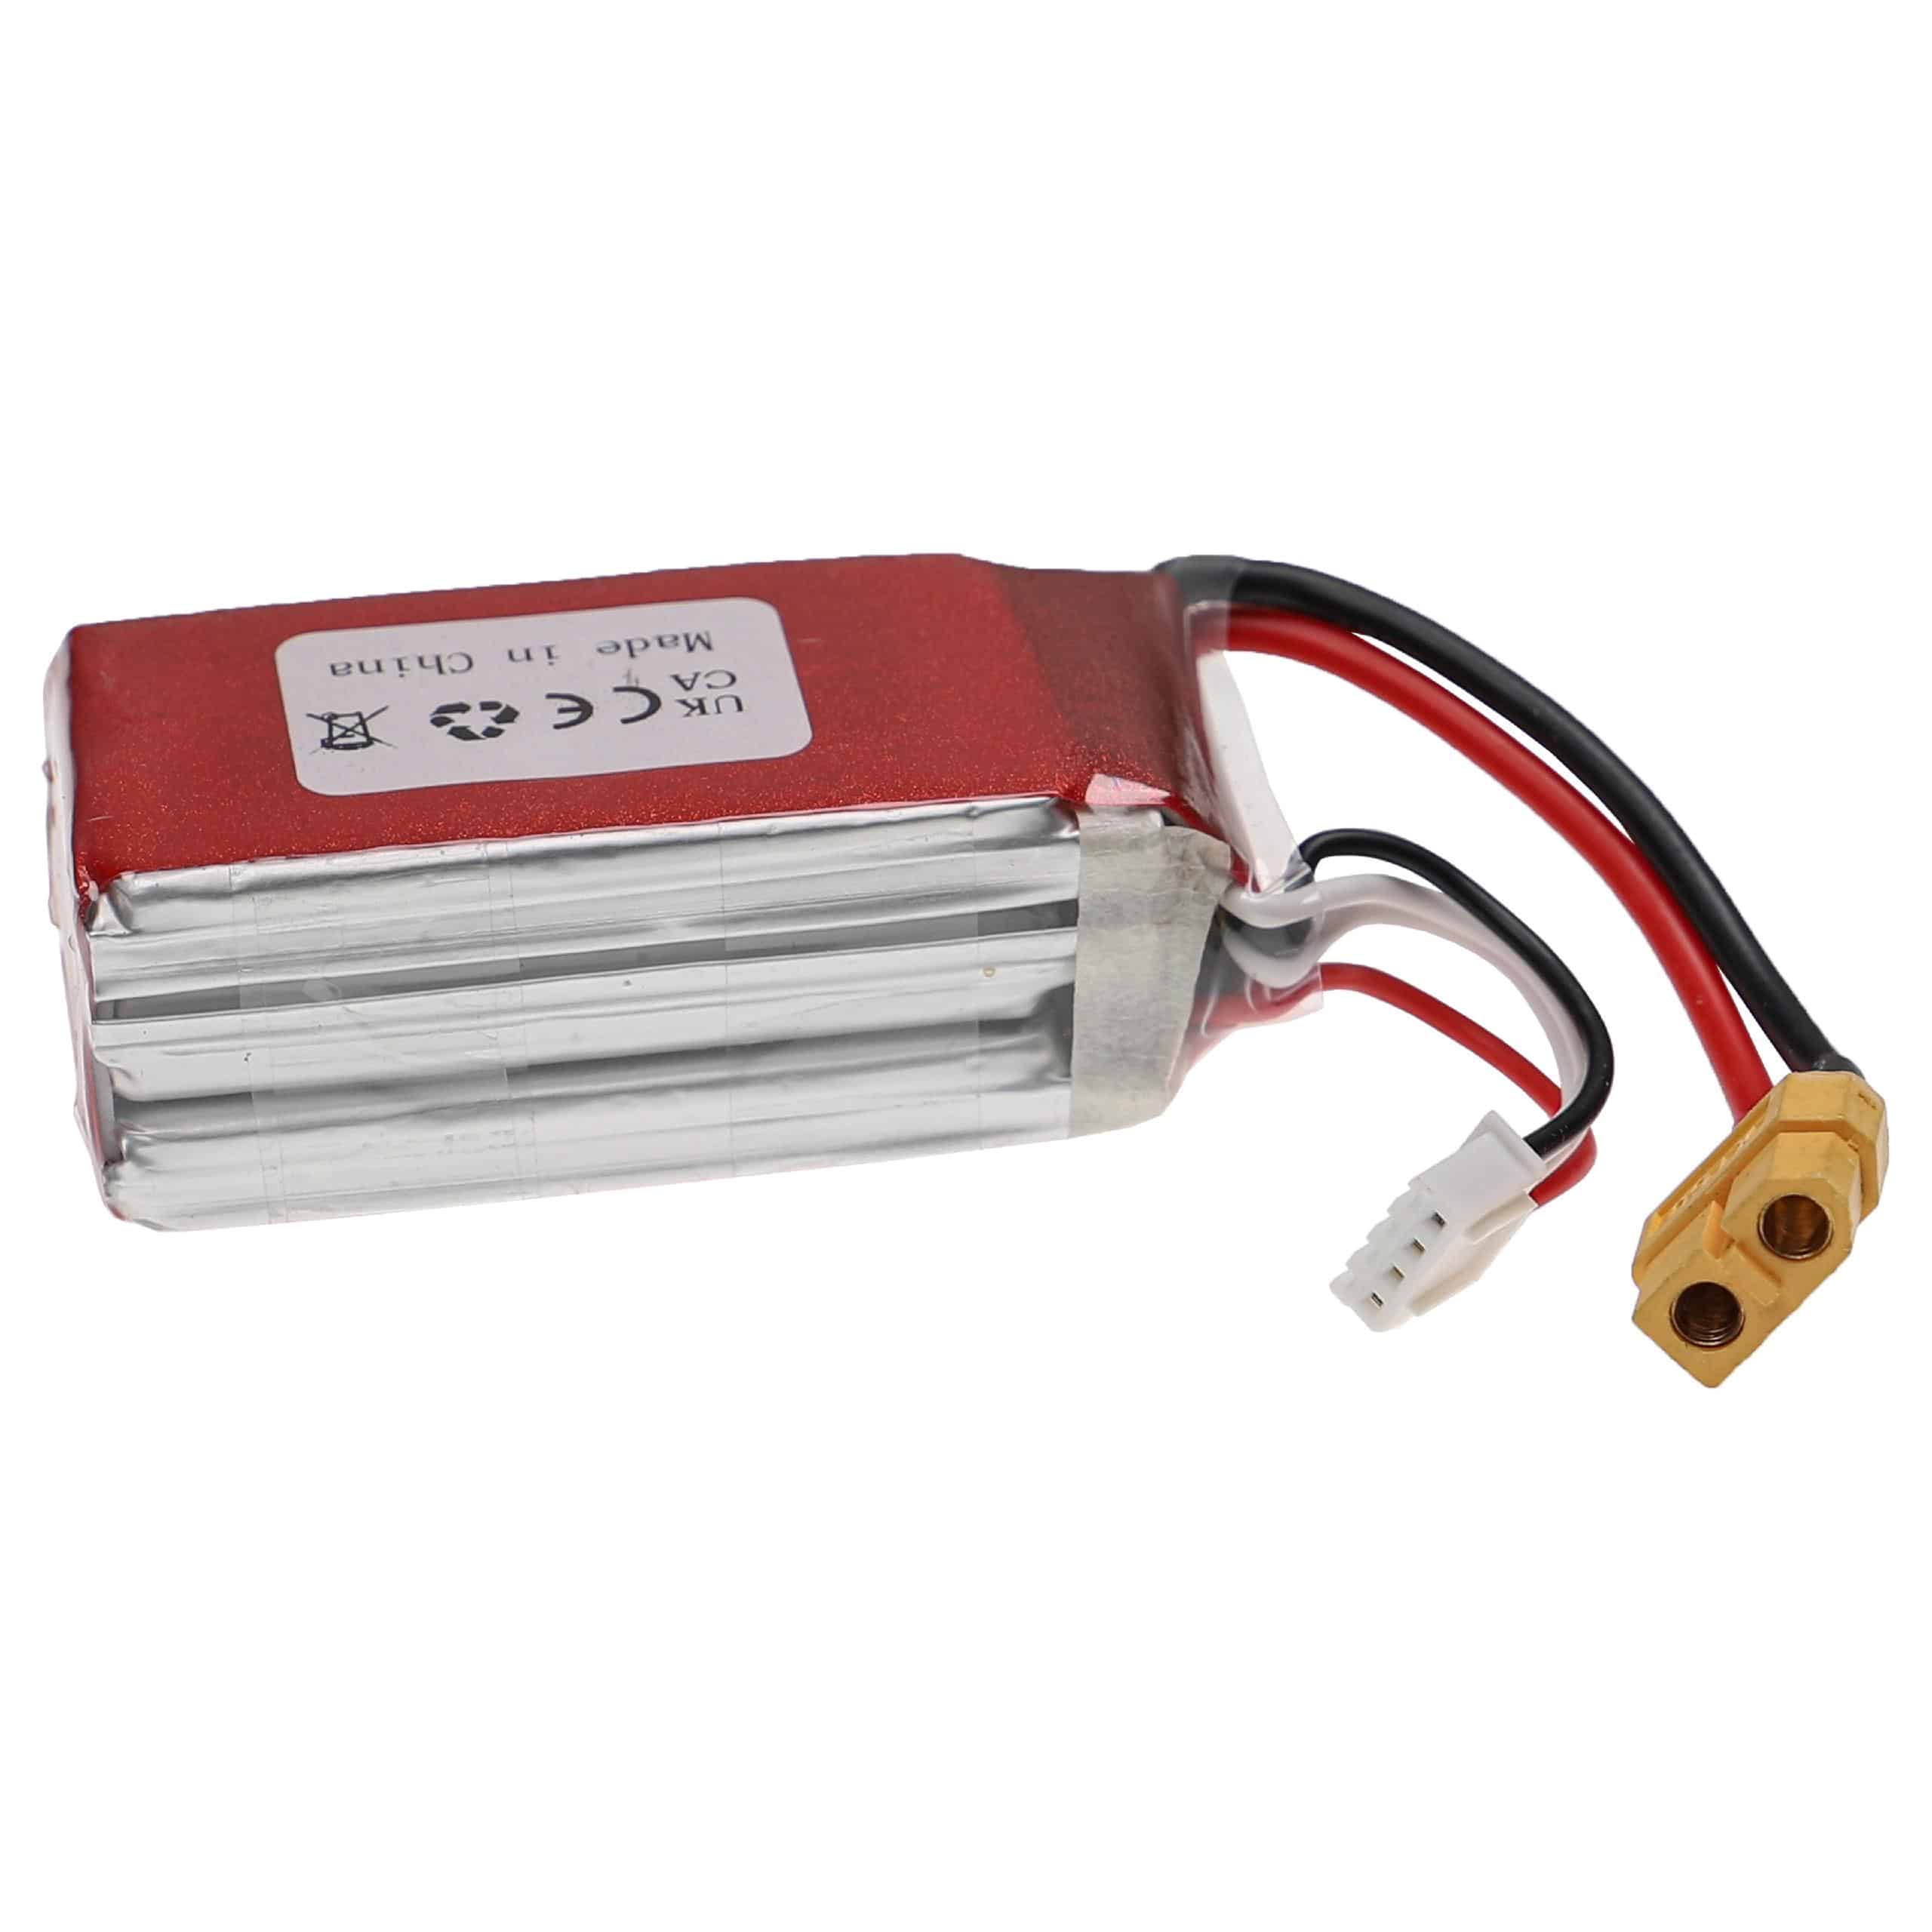 Akumulator do modeli zdalnie sterowanych RC - 1600 mAh 11,1 V LiPo, XT60